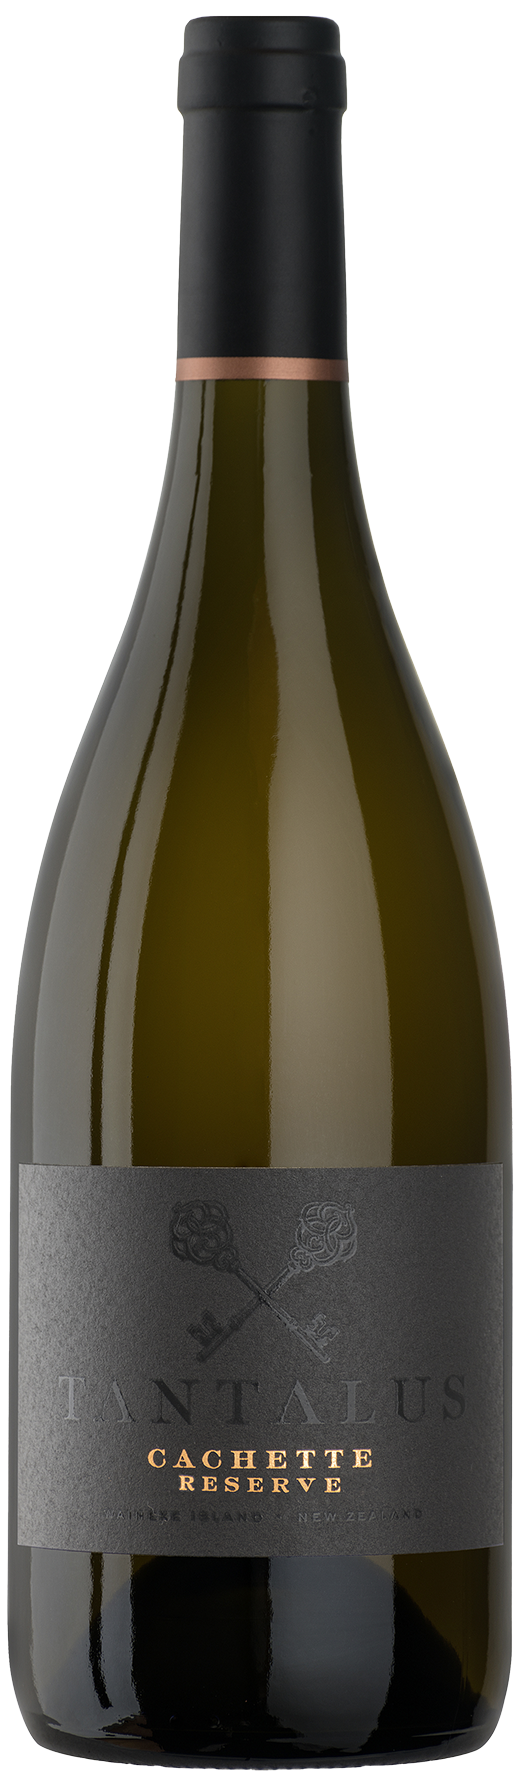 Tantalus 'Cachette' Reserve Chardonnay